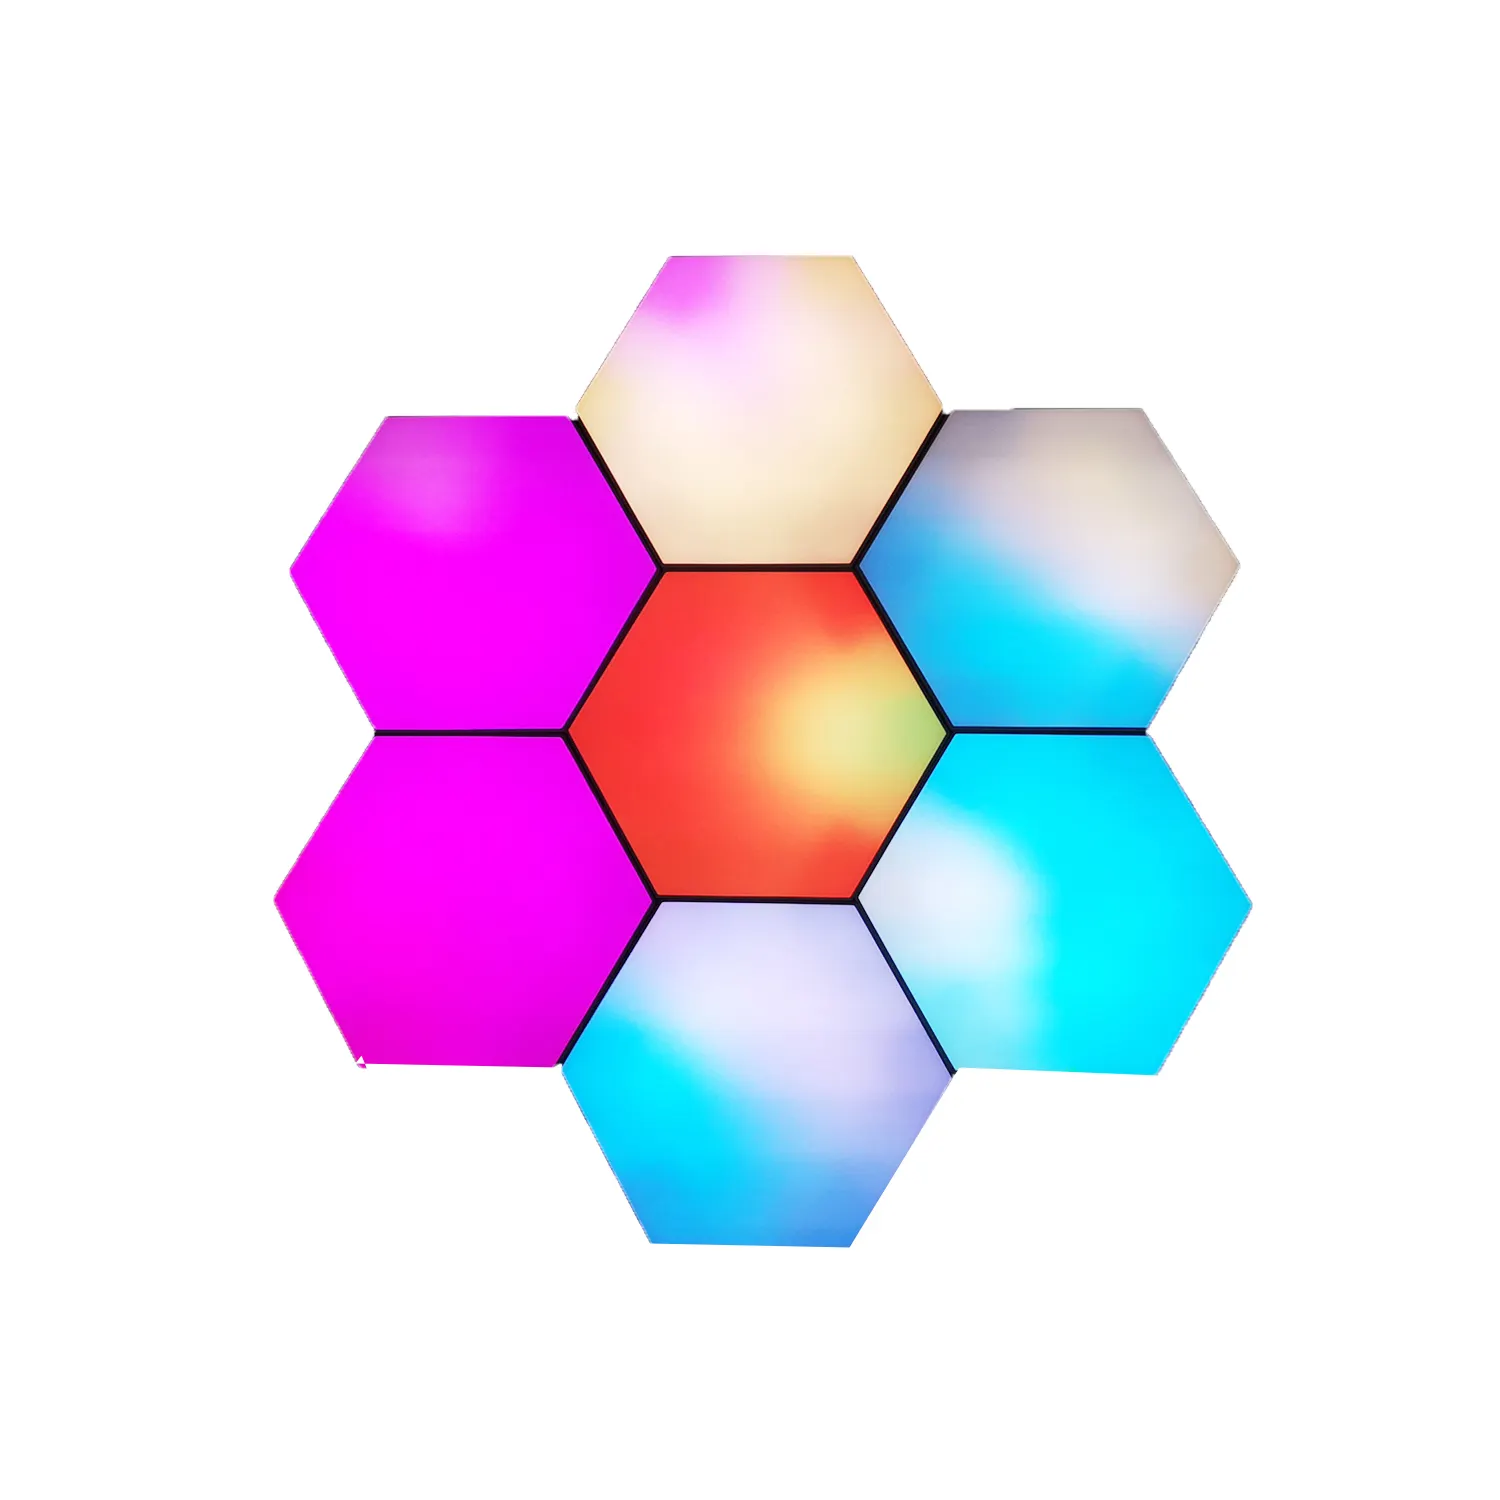 New Product Ideas 2023 Led Lamp Wall Led Light Hexagon Smart Hexagon Light For Home Decor Gaming Room